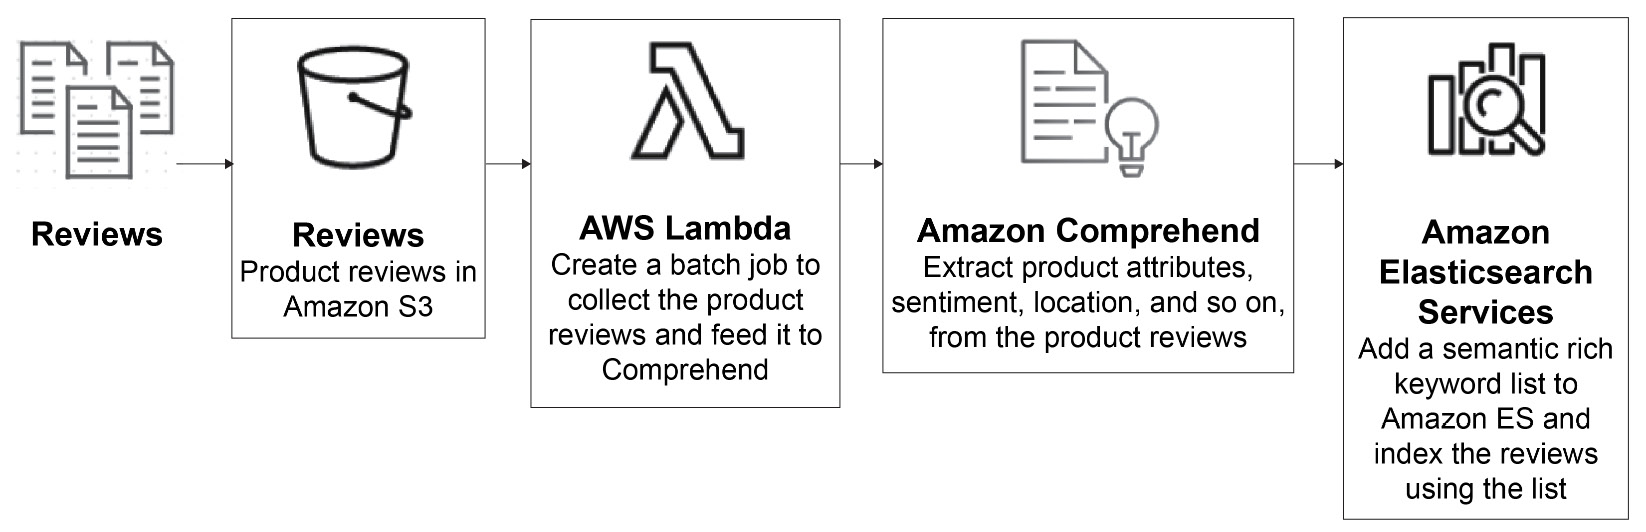 Figure 2.2: Amazon Comprehend search flow
